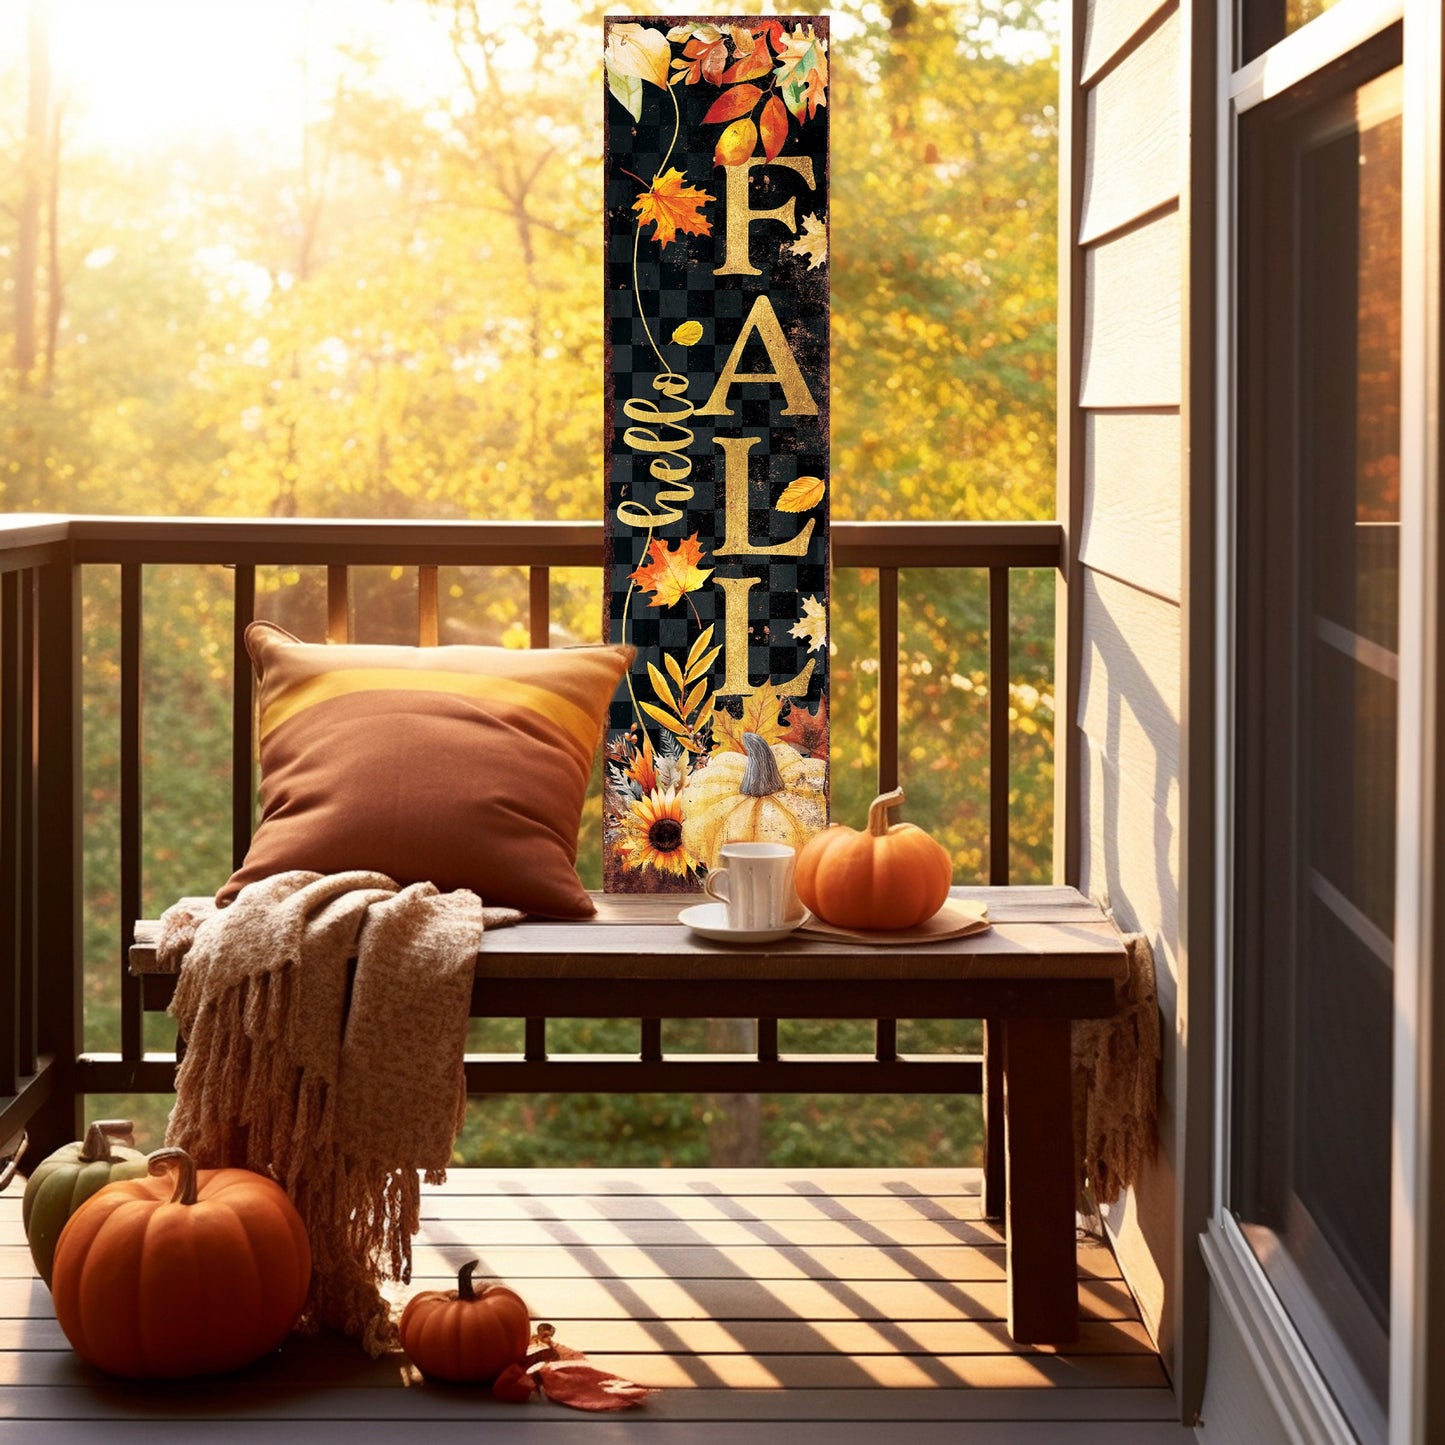 36in Fall Halloween Porch Sign - Vintage Autumn Decoration - Rustic Modern Farmhouse Entryway Decor - Reversible Design